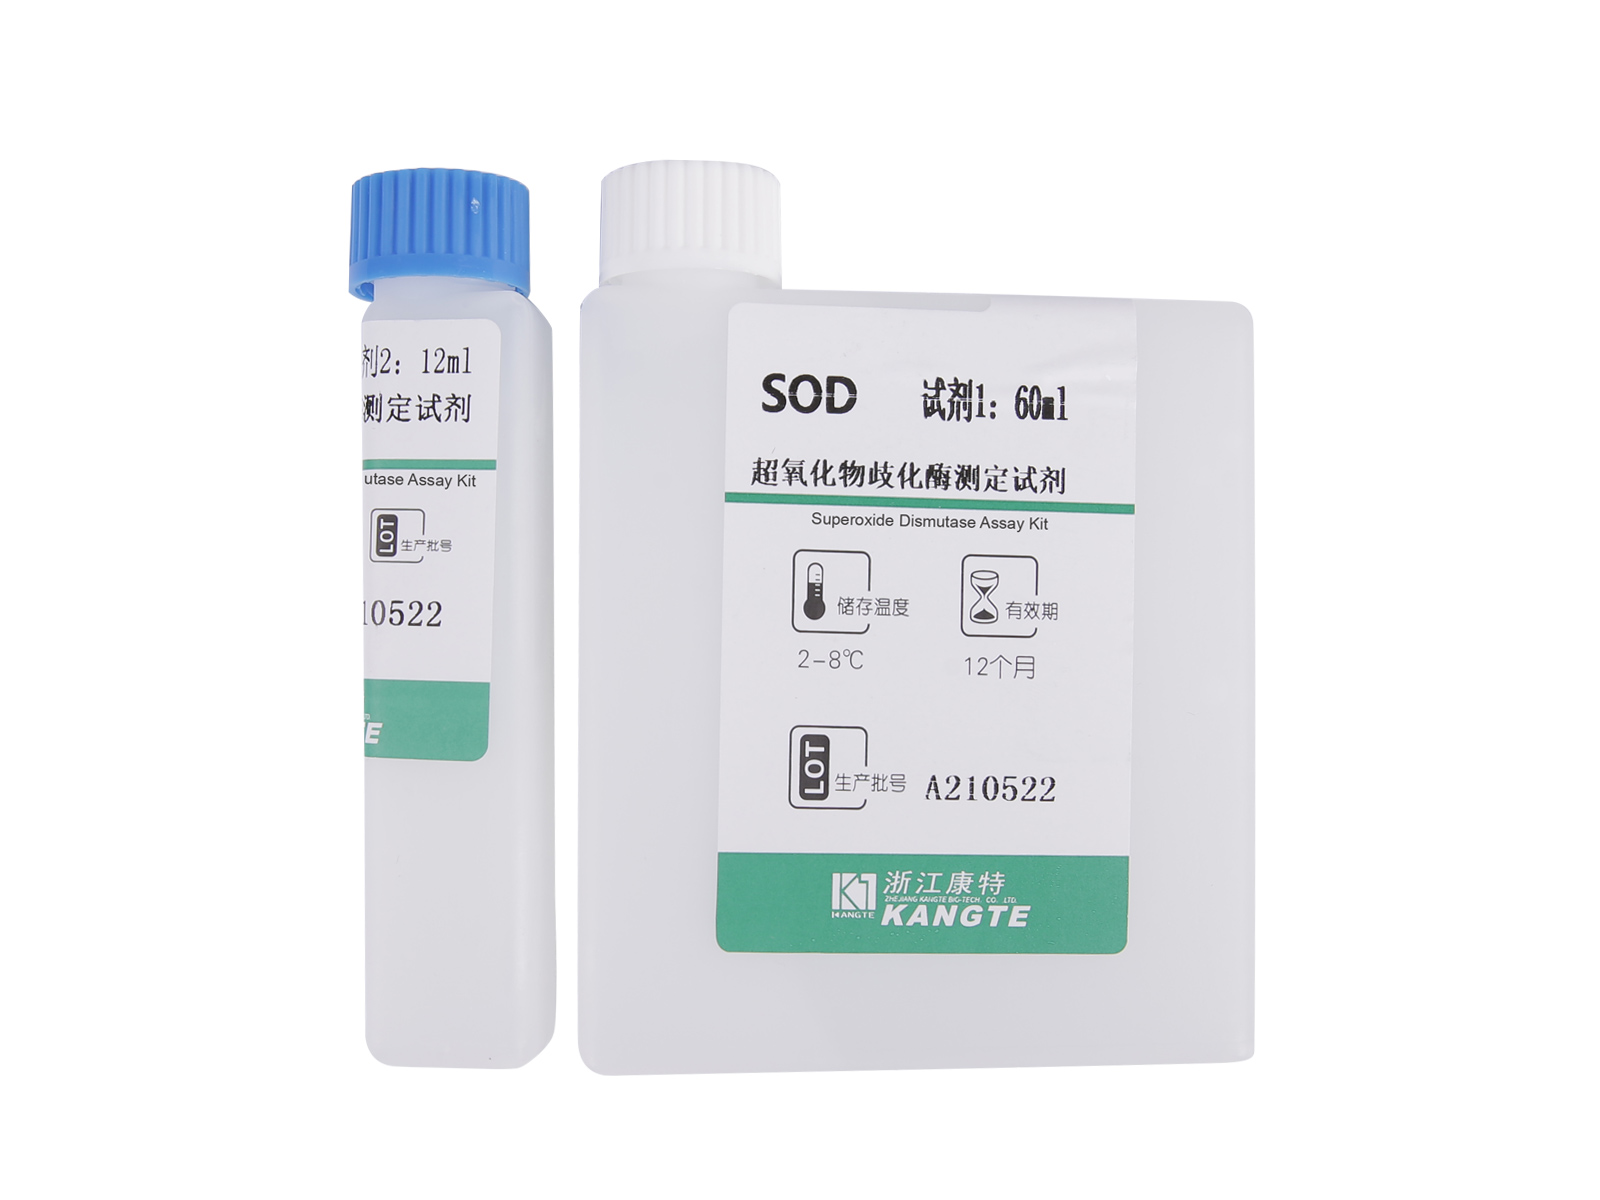 【SOD】Kit Uji Superoksida Dismutase (Metode Kolorimetri)